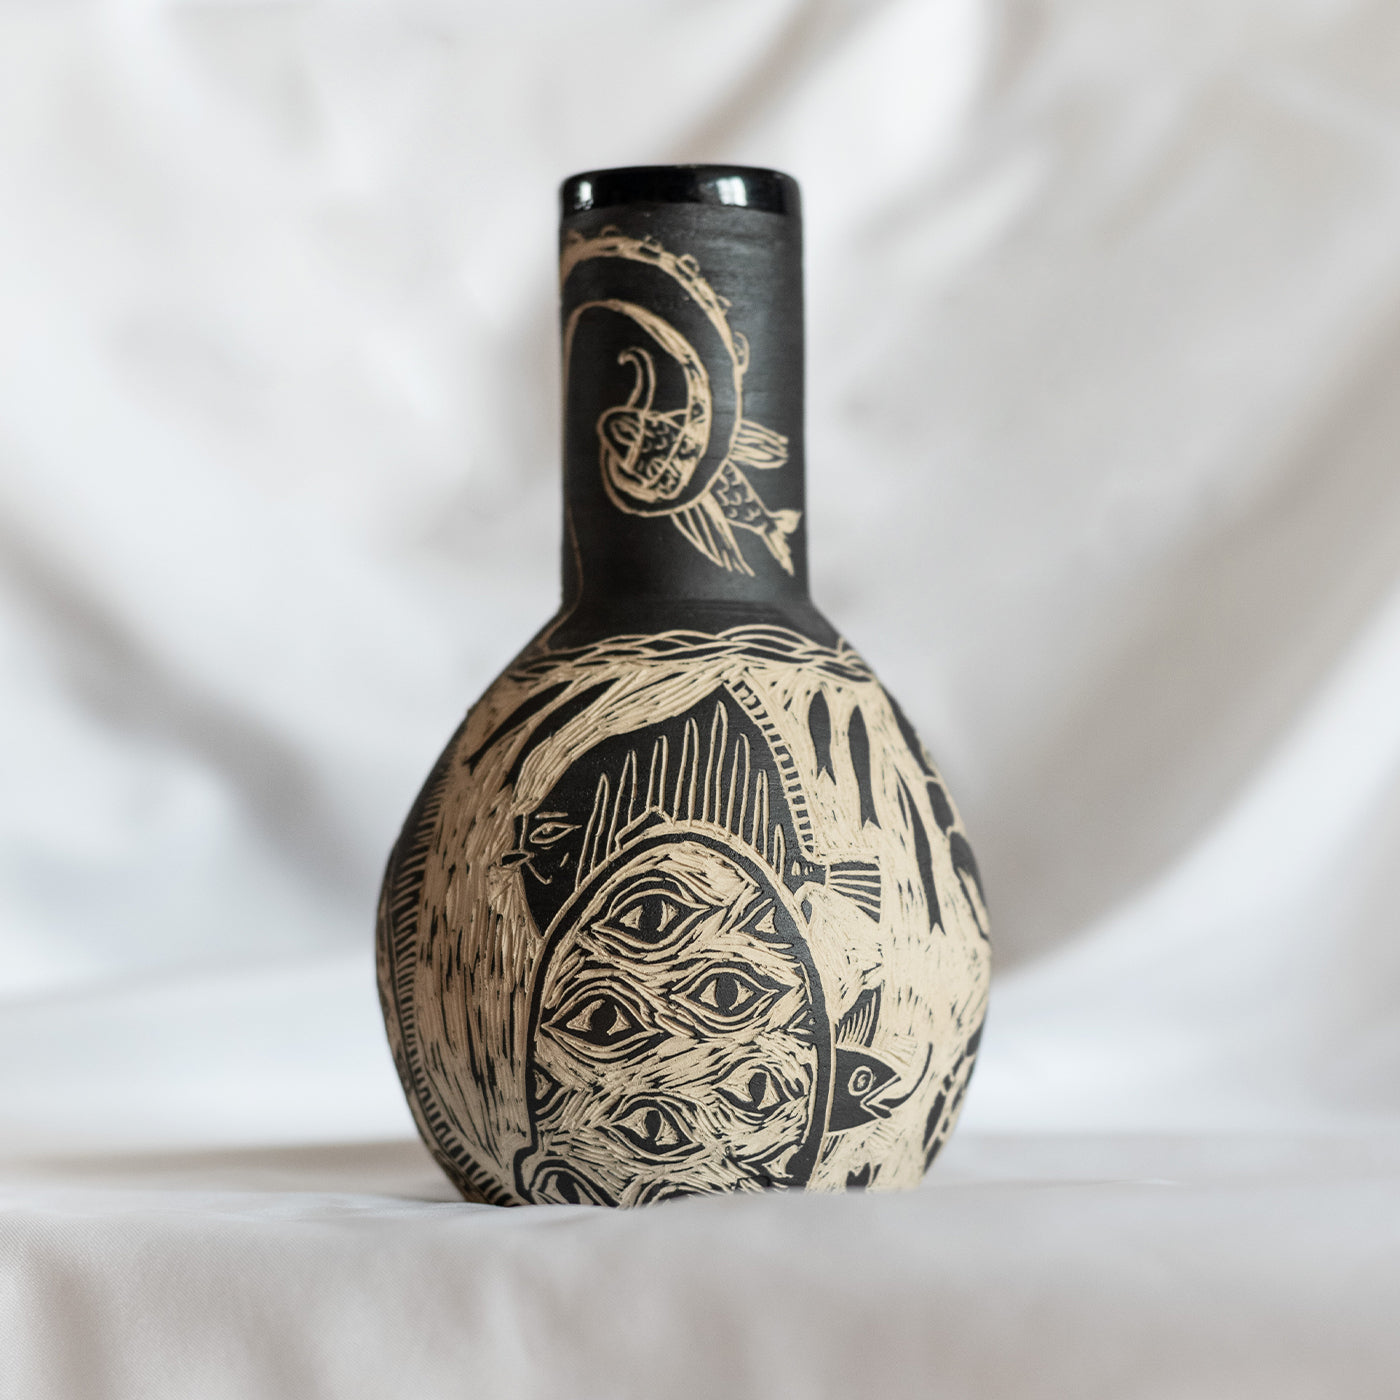 Granchio Beige and Black Grès Small Vase - Alternative view 1